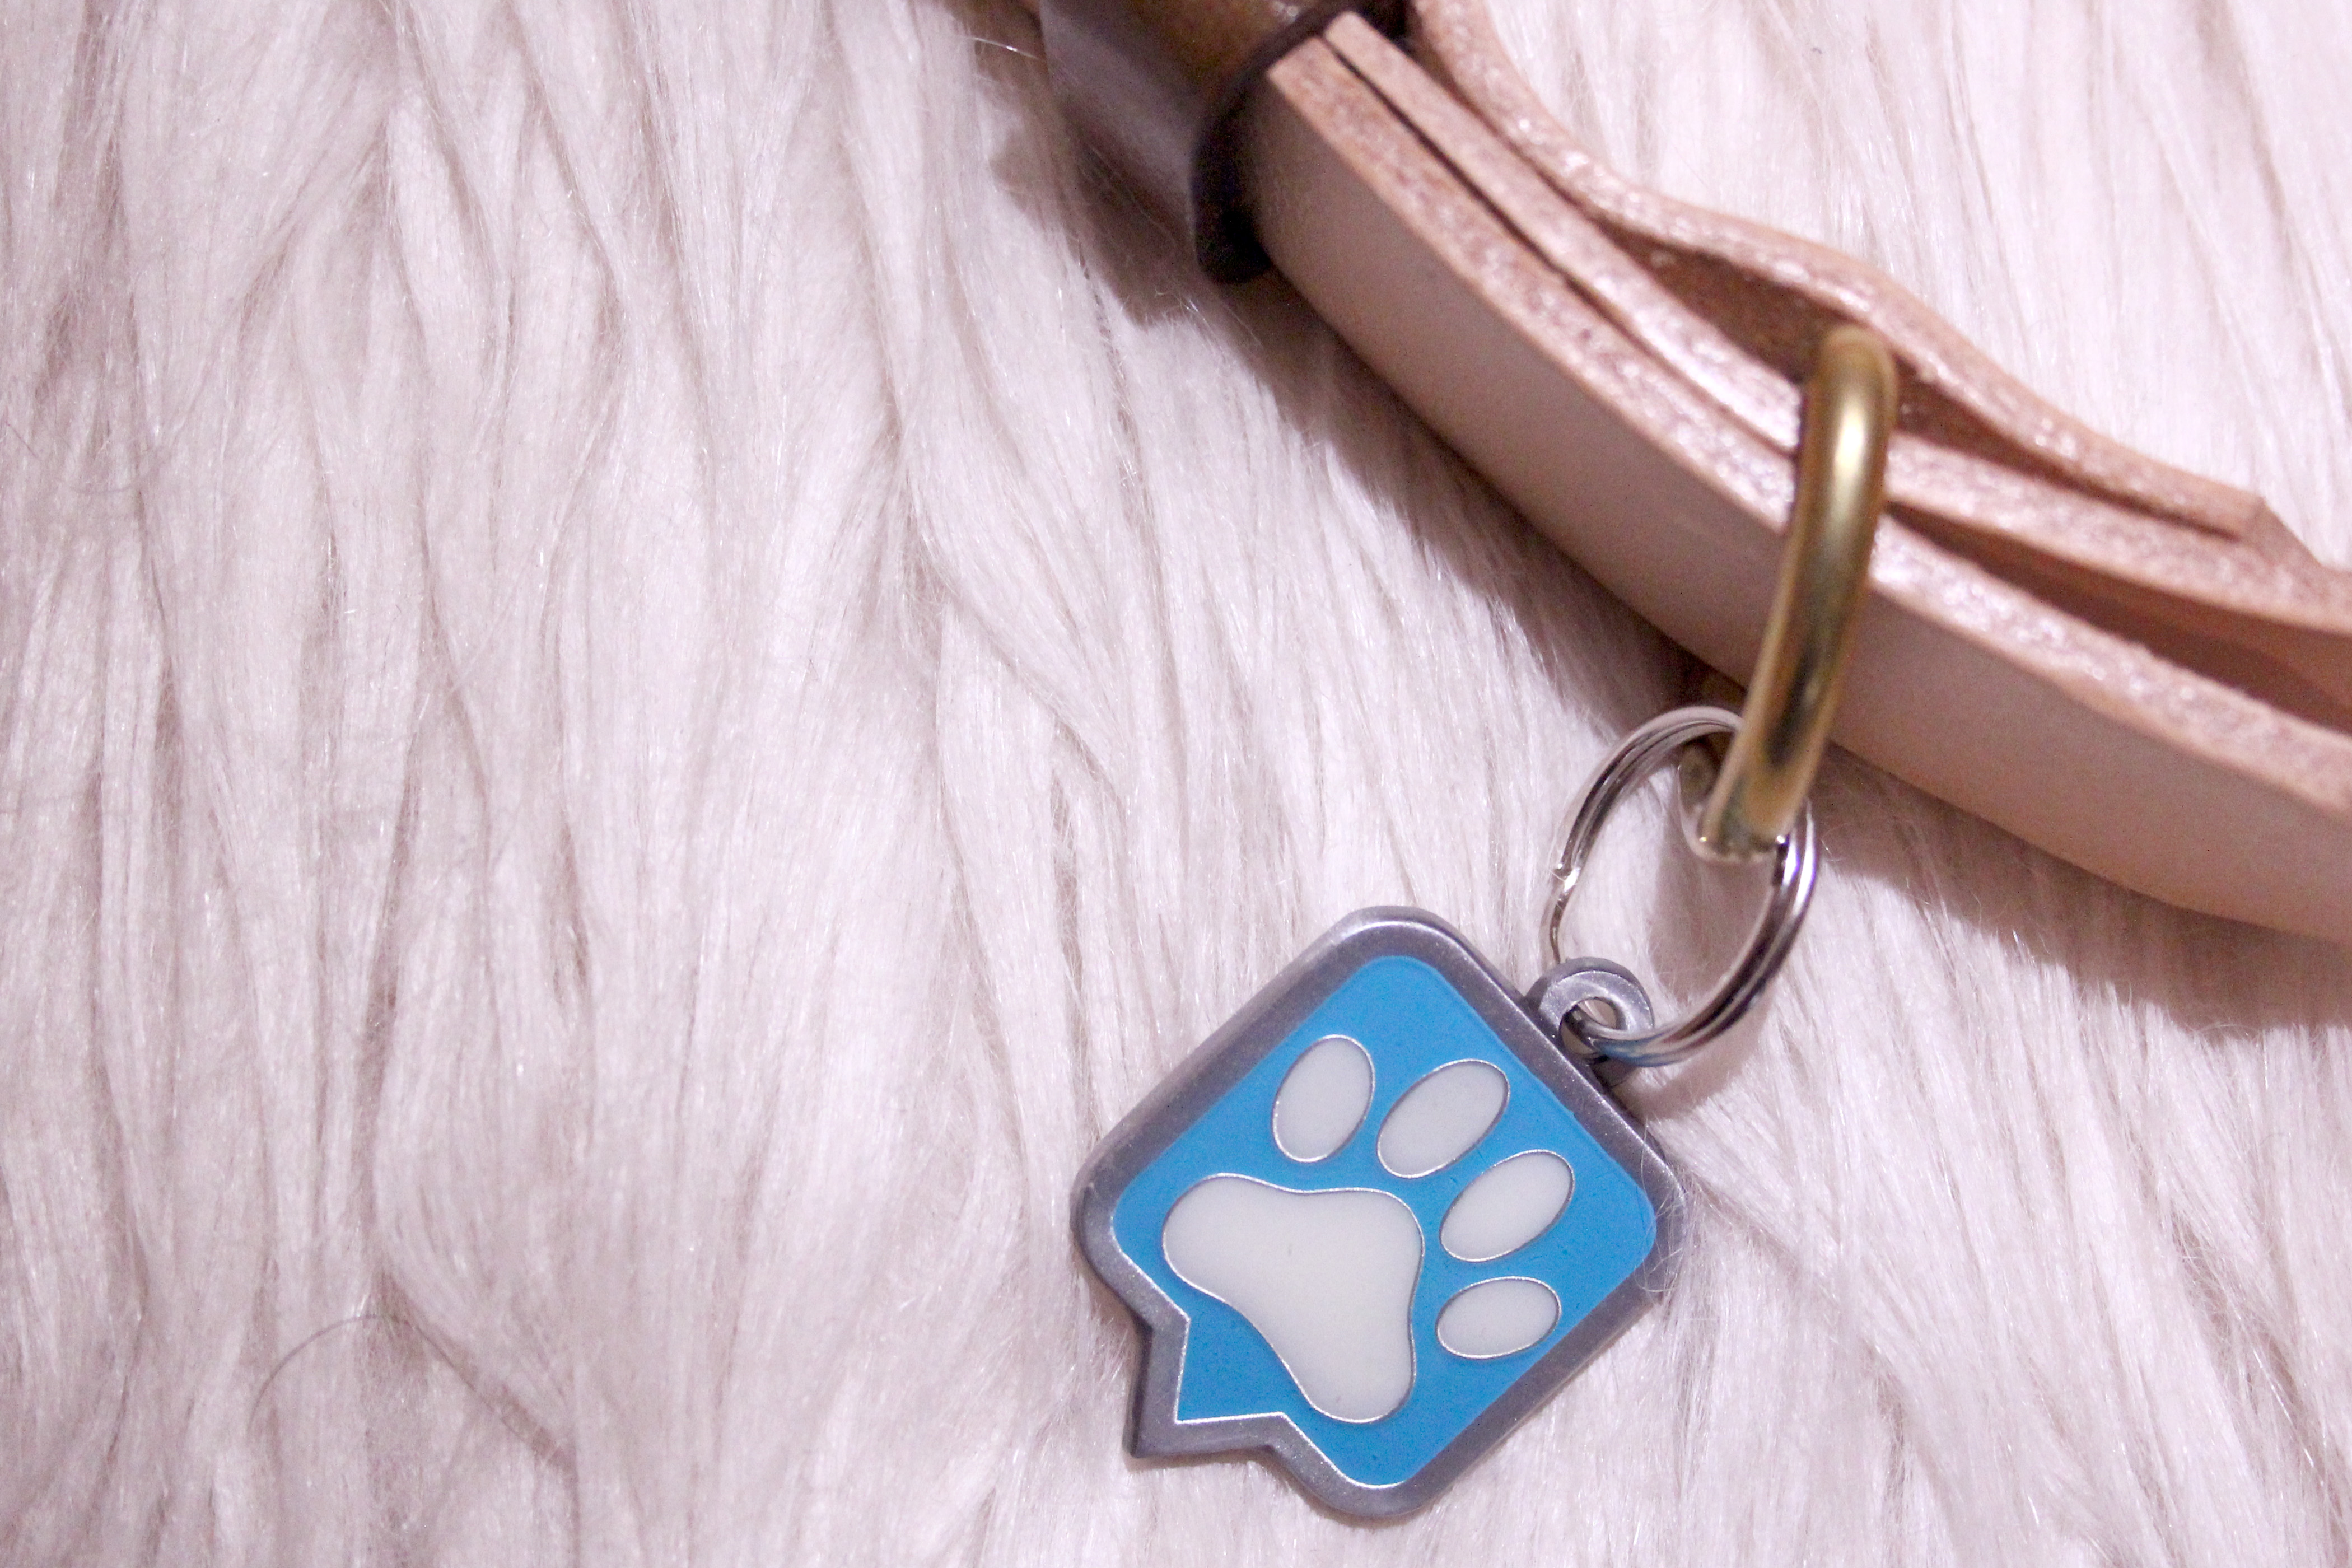 PAWtechnologies tag on a dog collar 